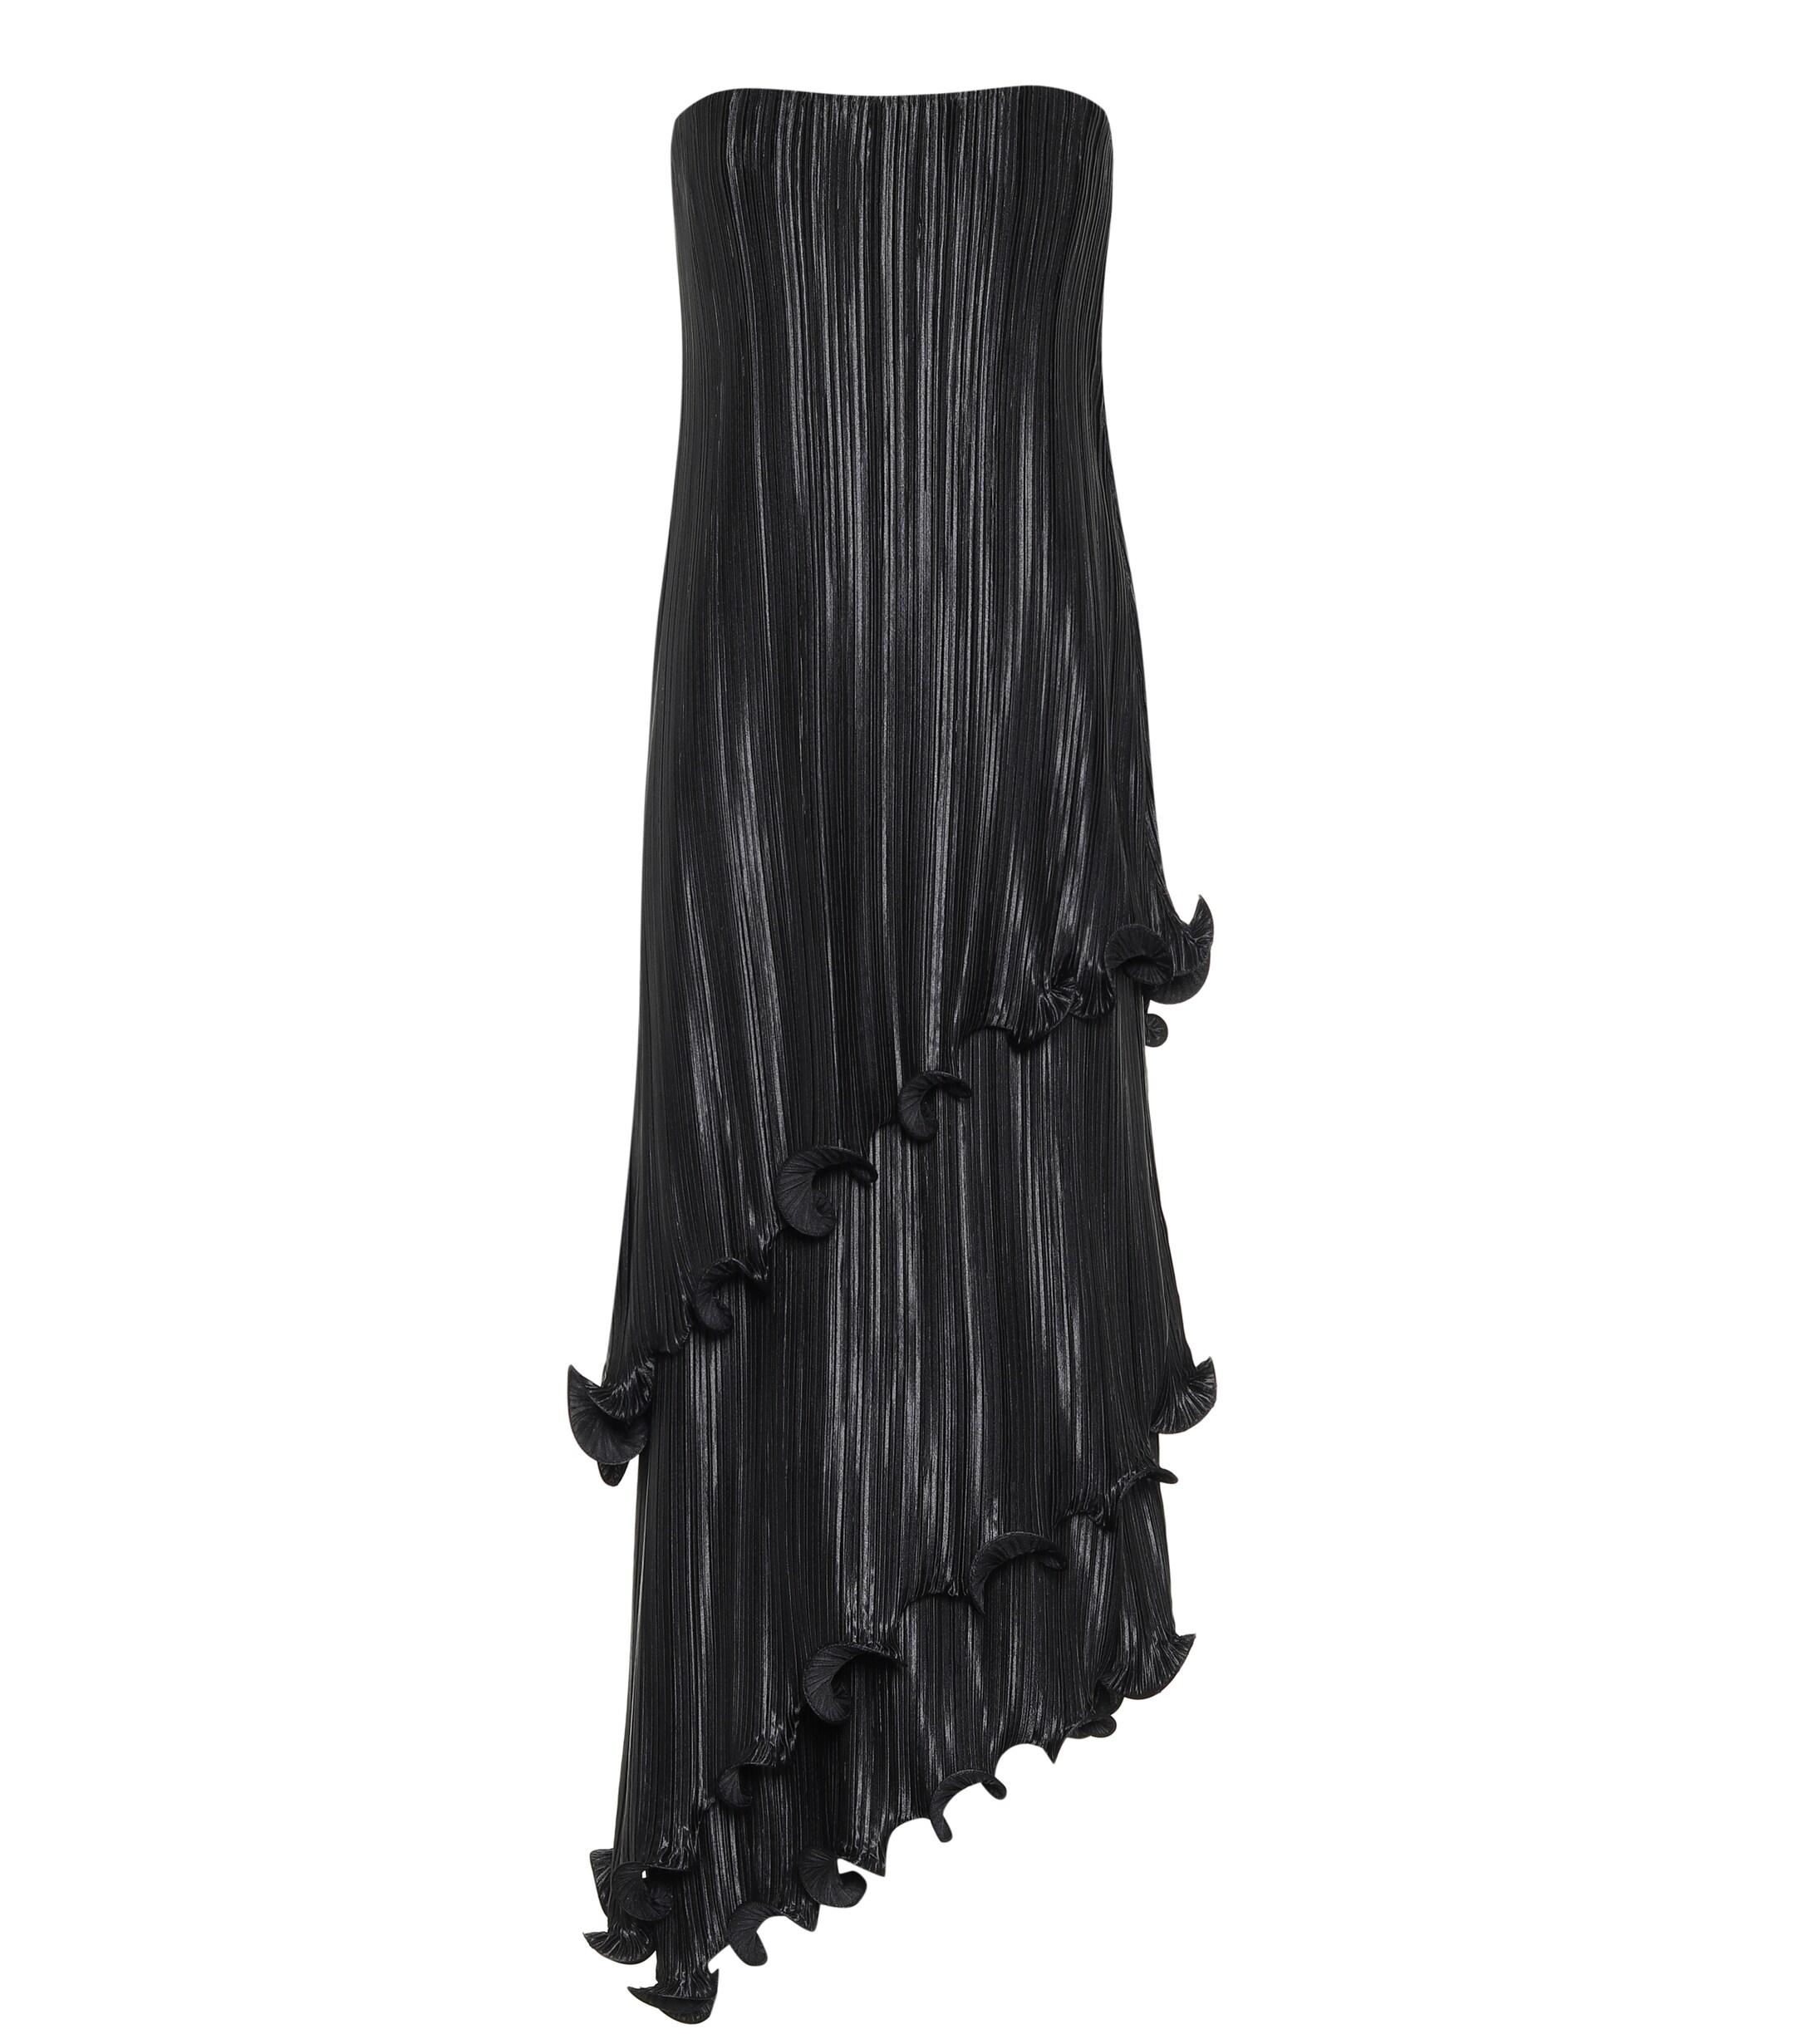 Givenchy Asymmetric Pleated Satin Midi Dress in Black - Lyst